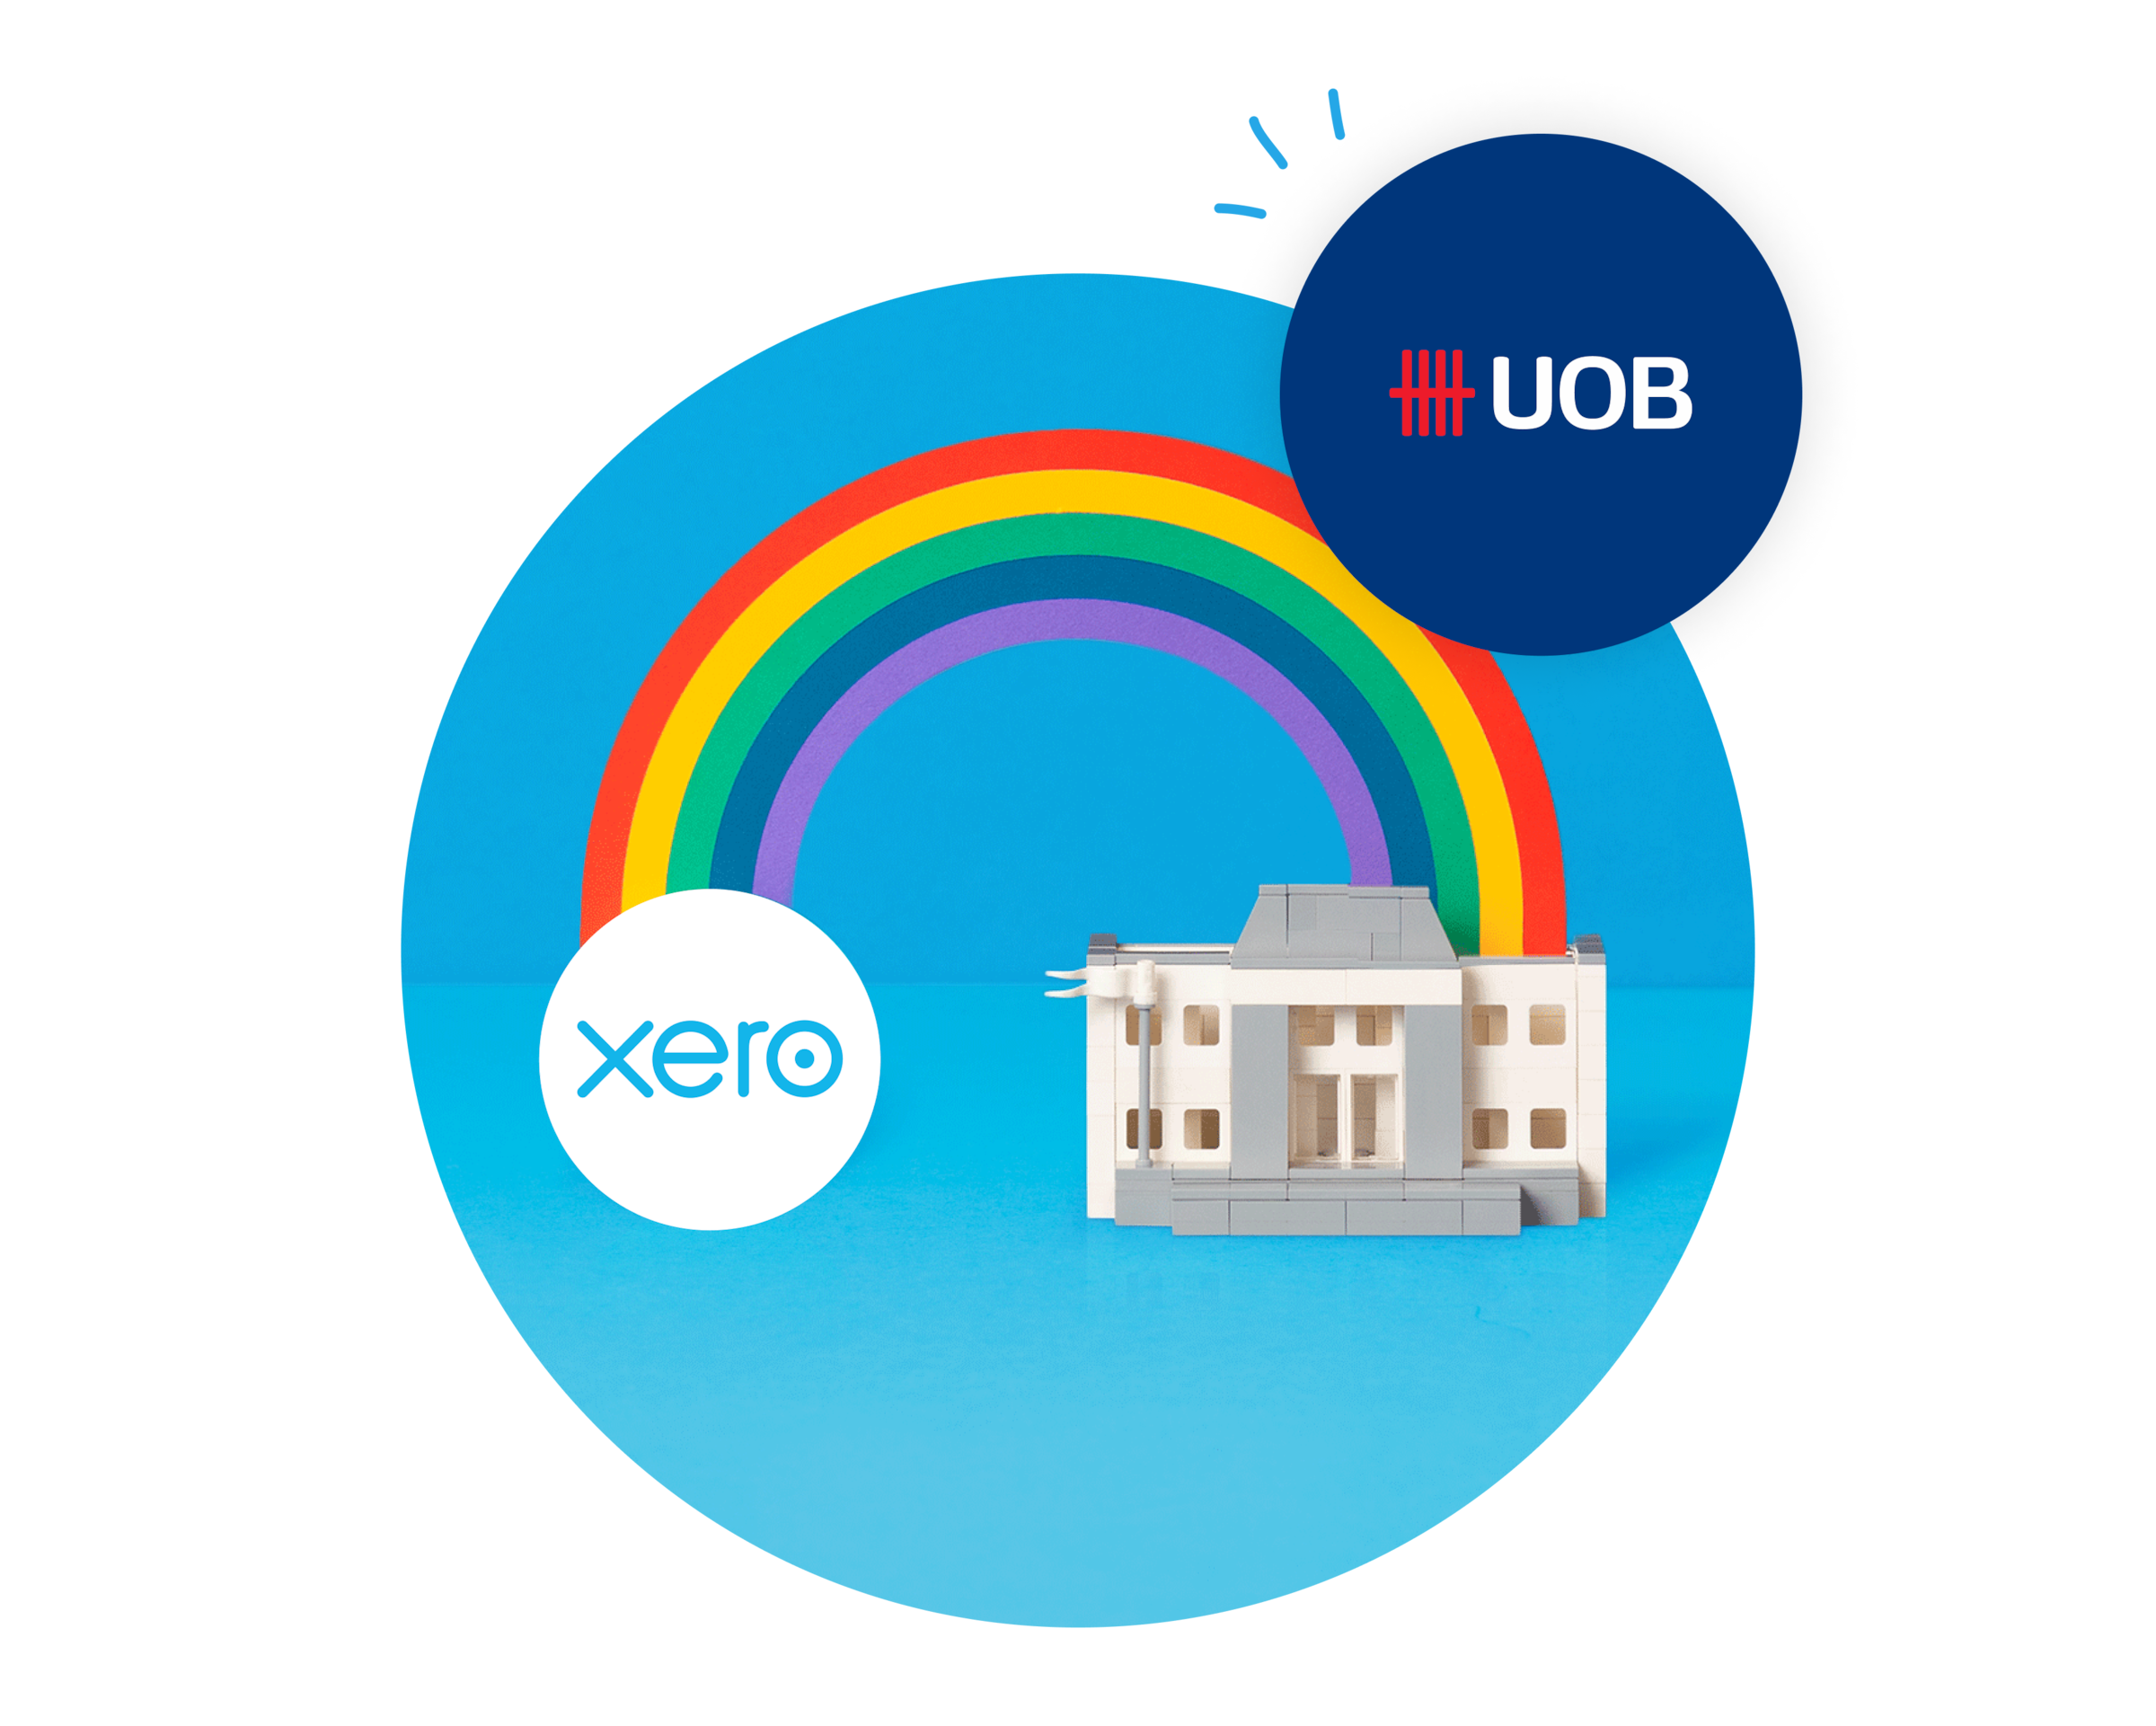 Image of Rainbow connecting the Xero logo and UOB logo